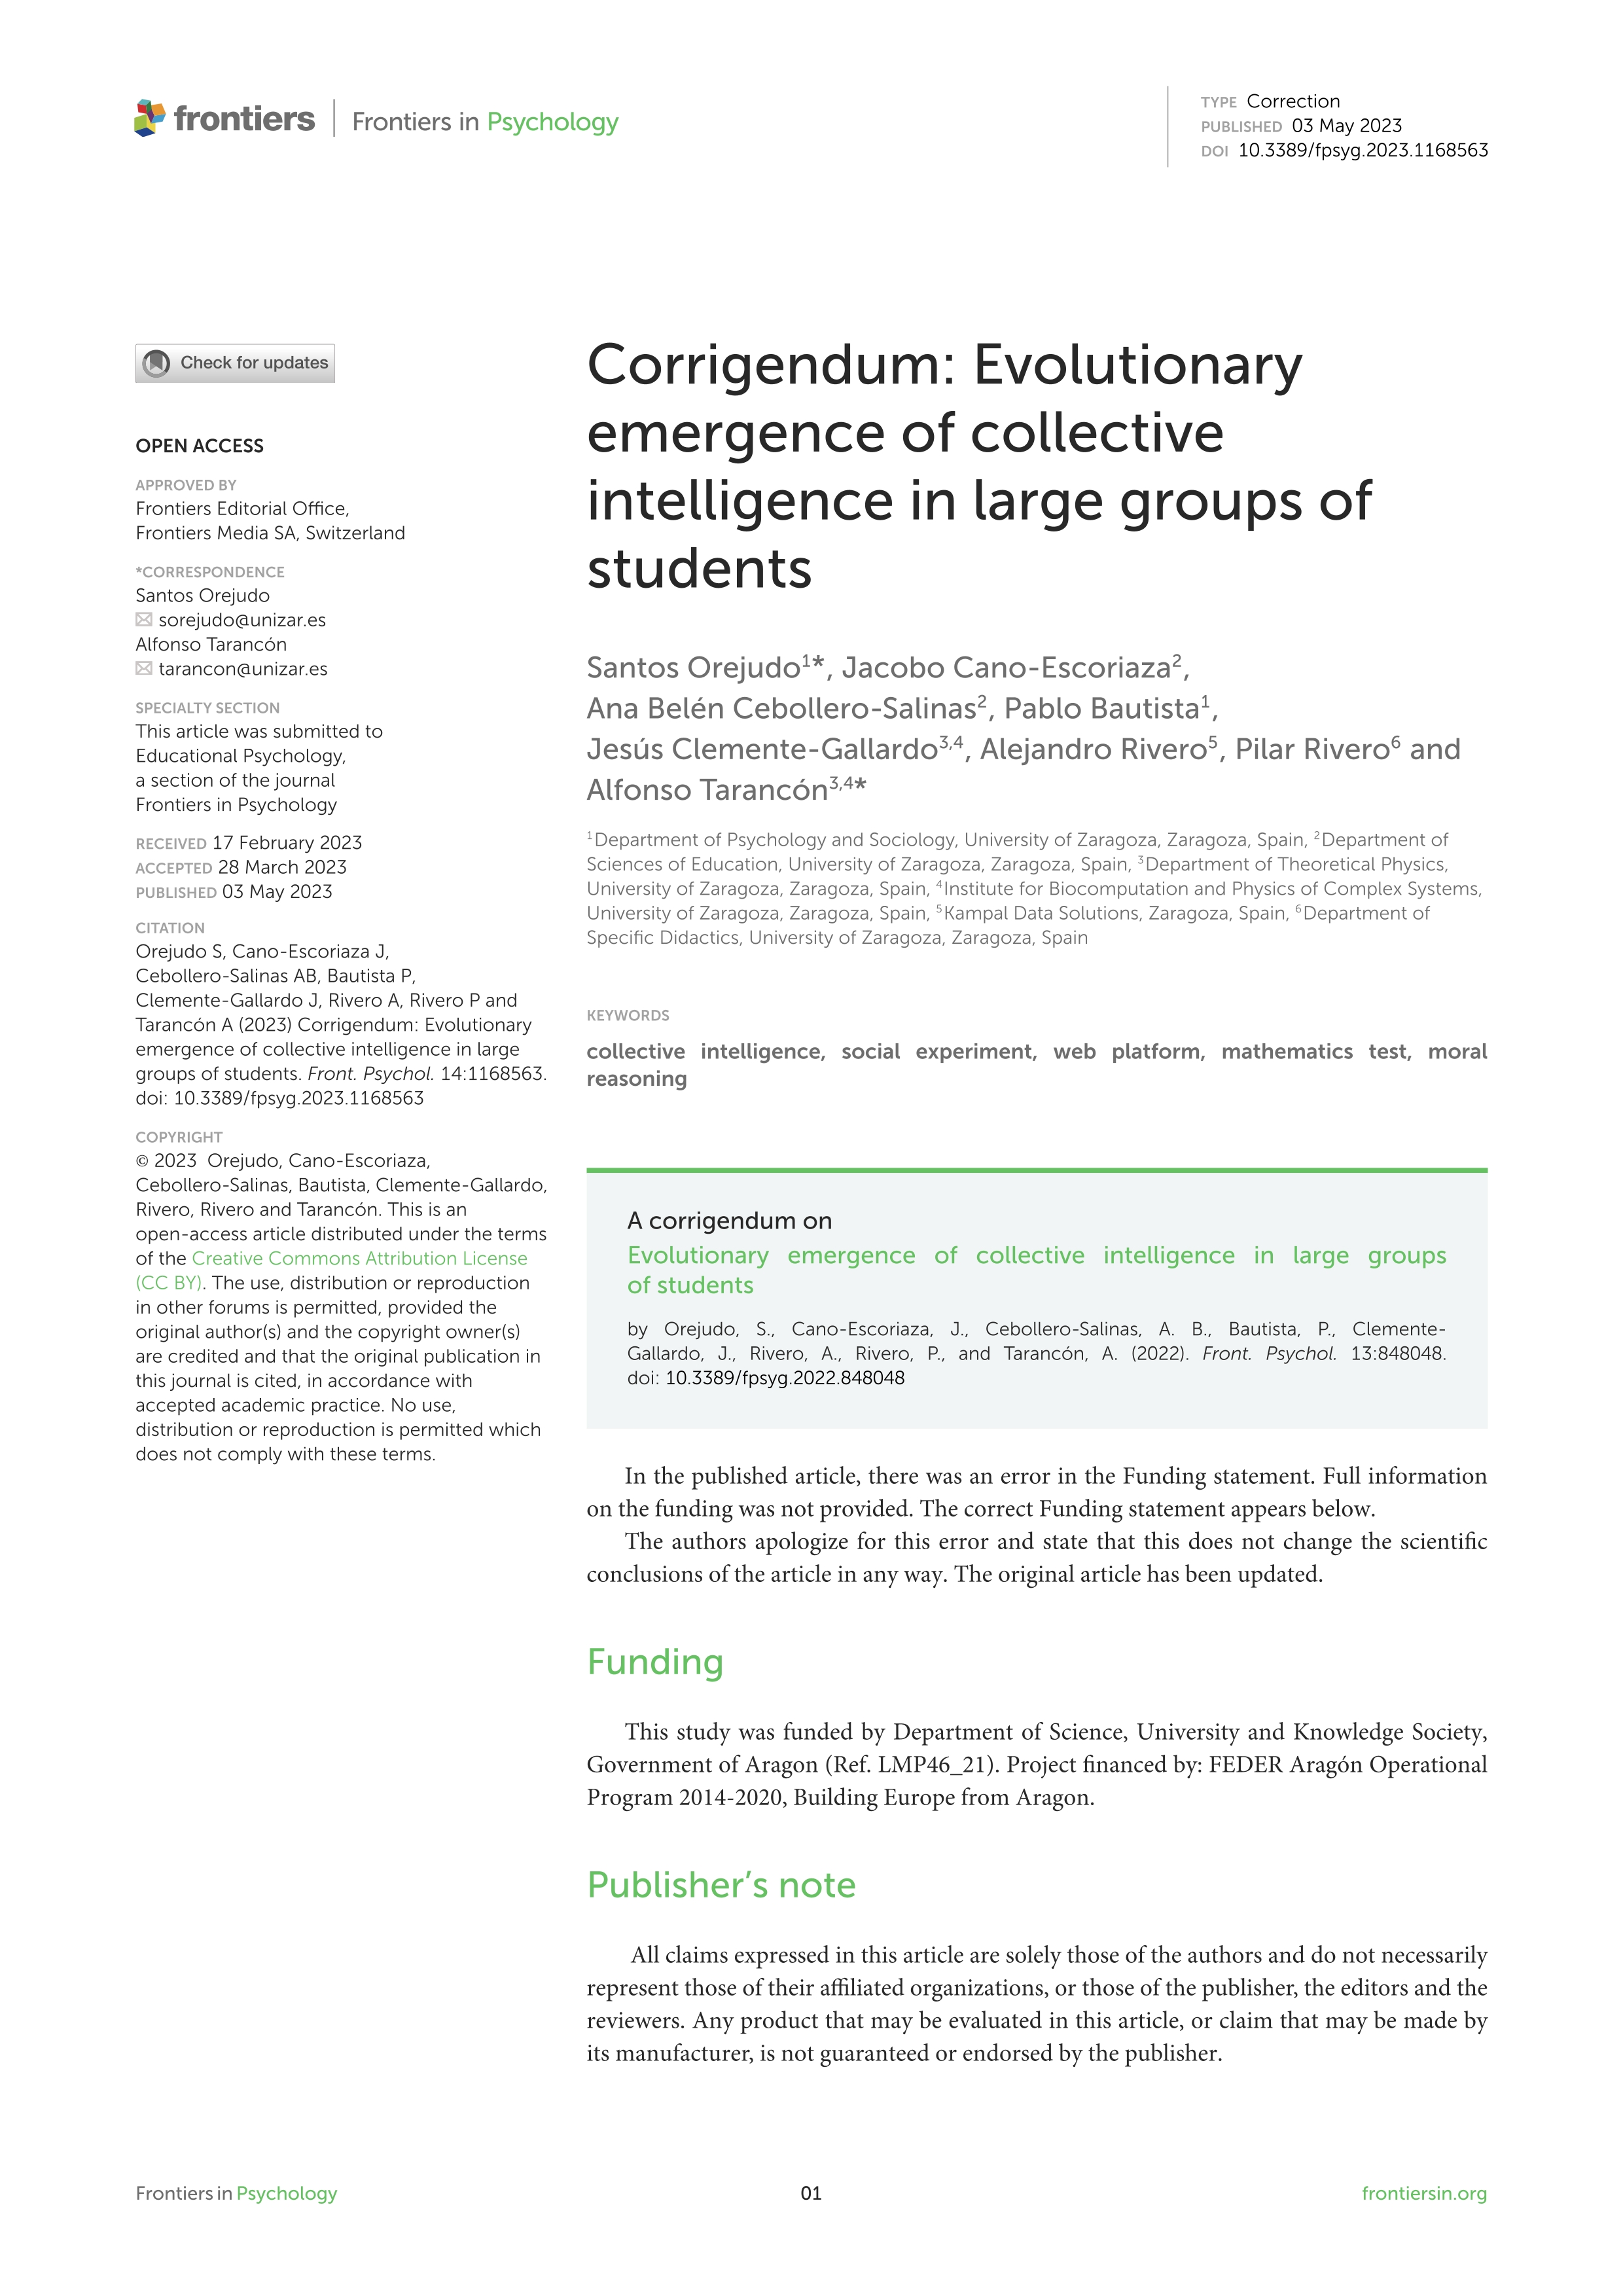 Corrigendum: Evolutionary emergence of collective intelligence in large groups of students